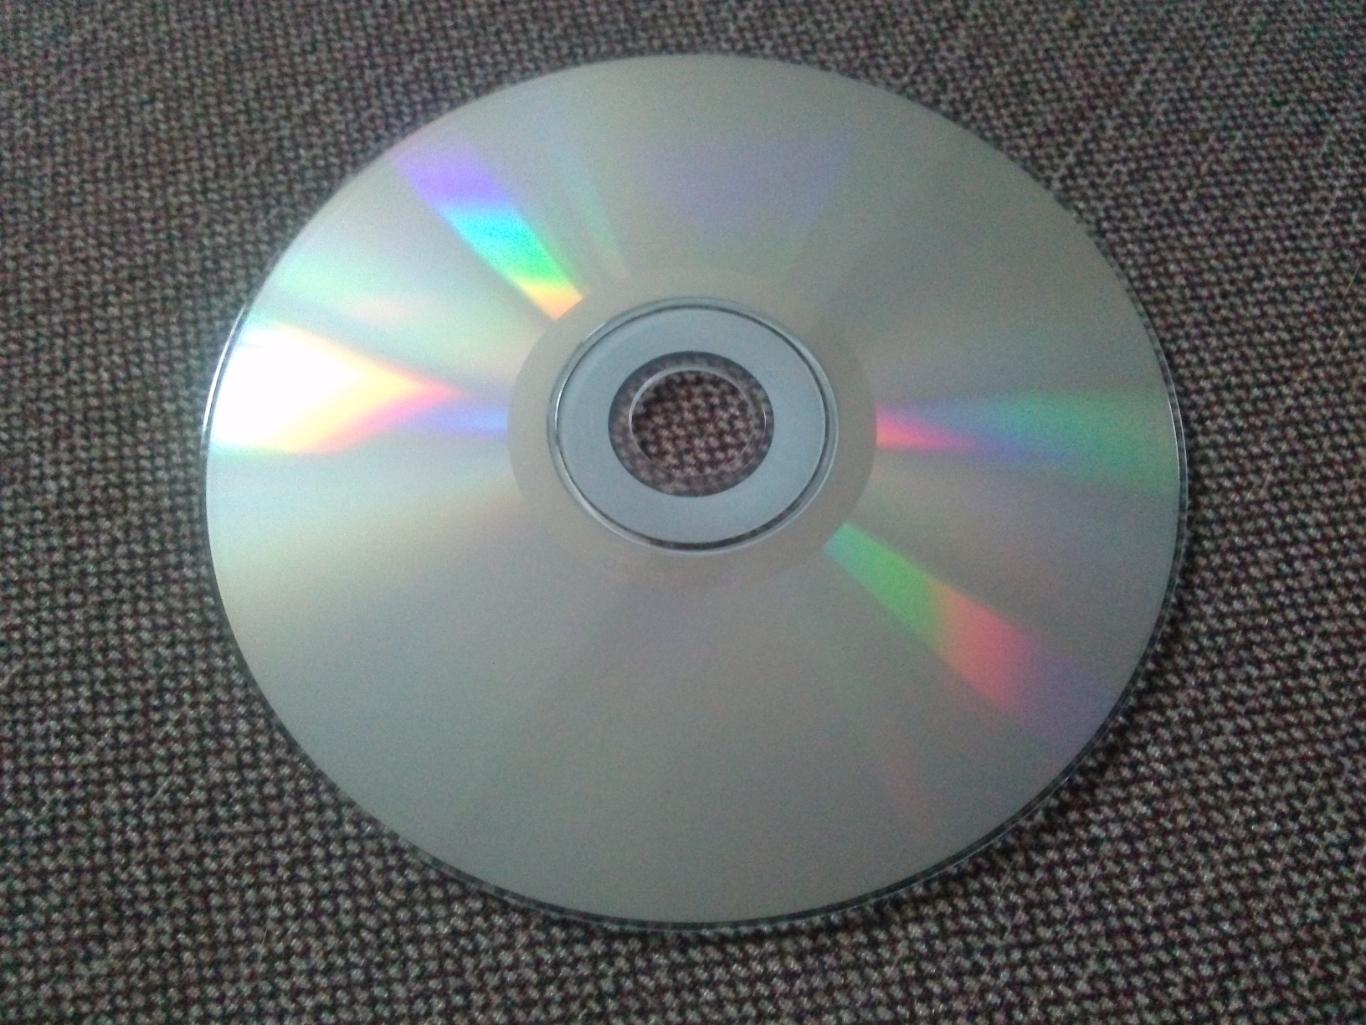 MP - 3 CD : группа Muse 1999 - 2006 гг. ( 6 альбомов) Рок - музыка 3